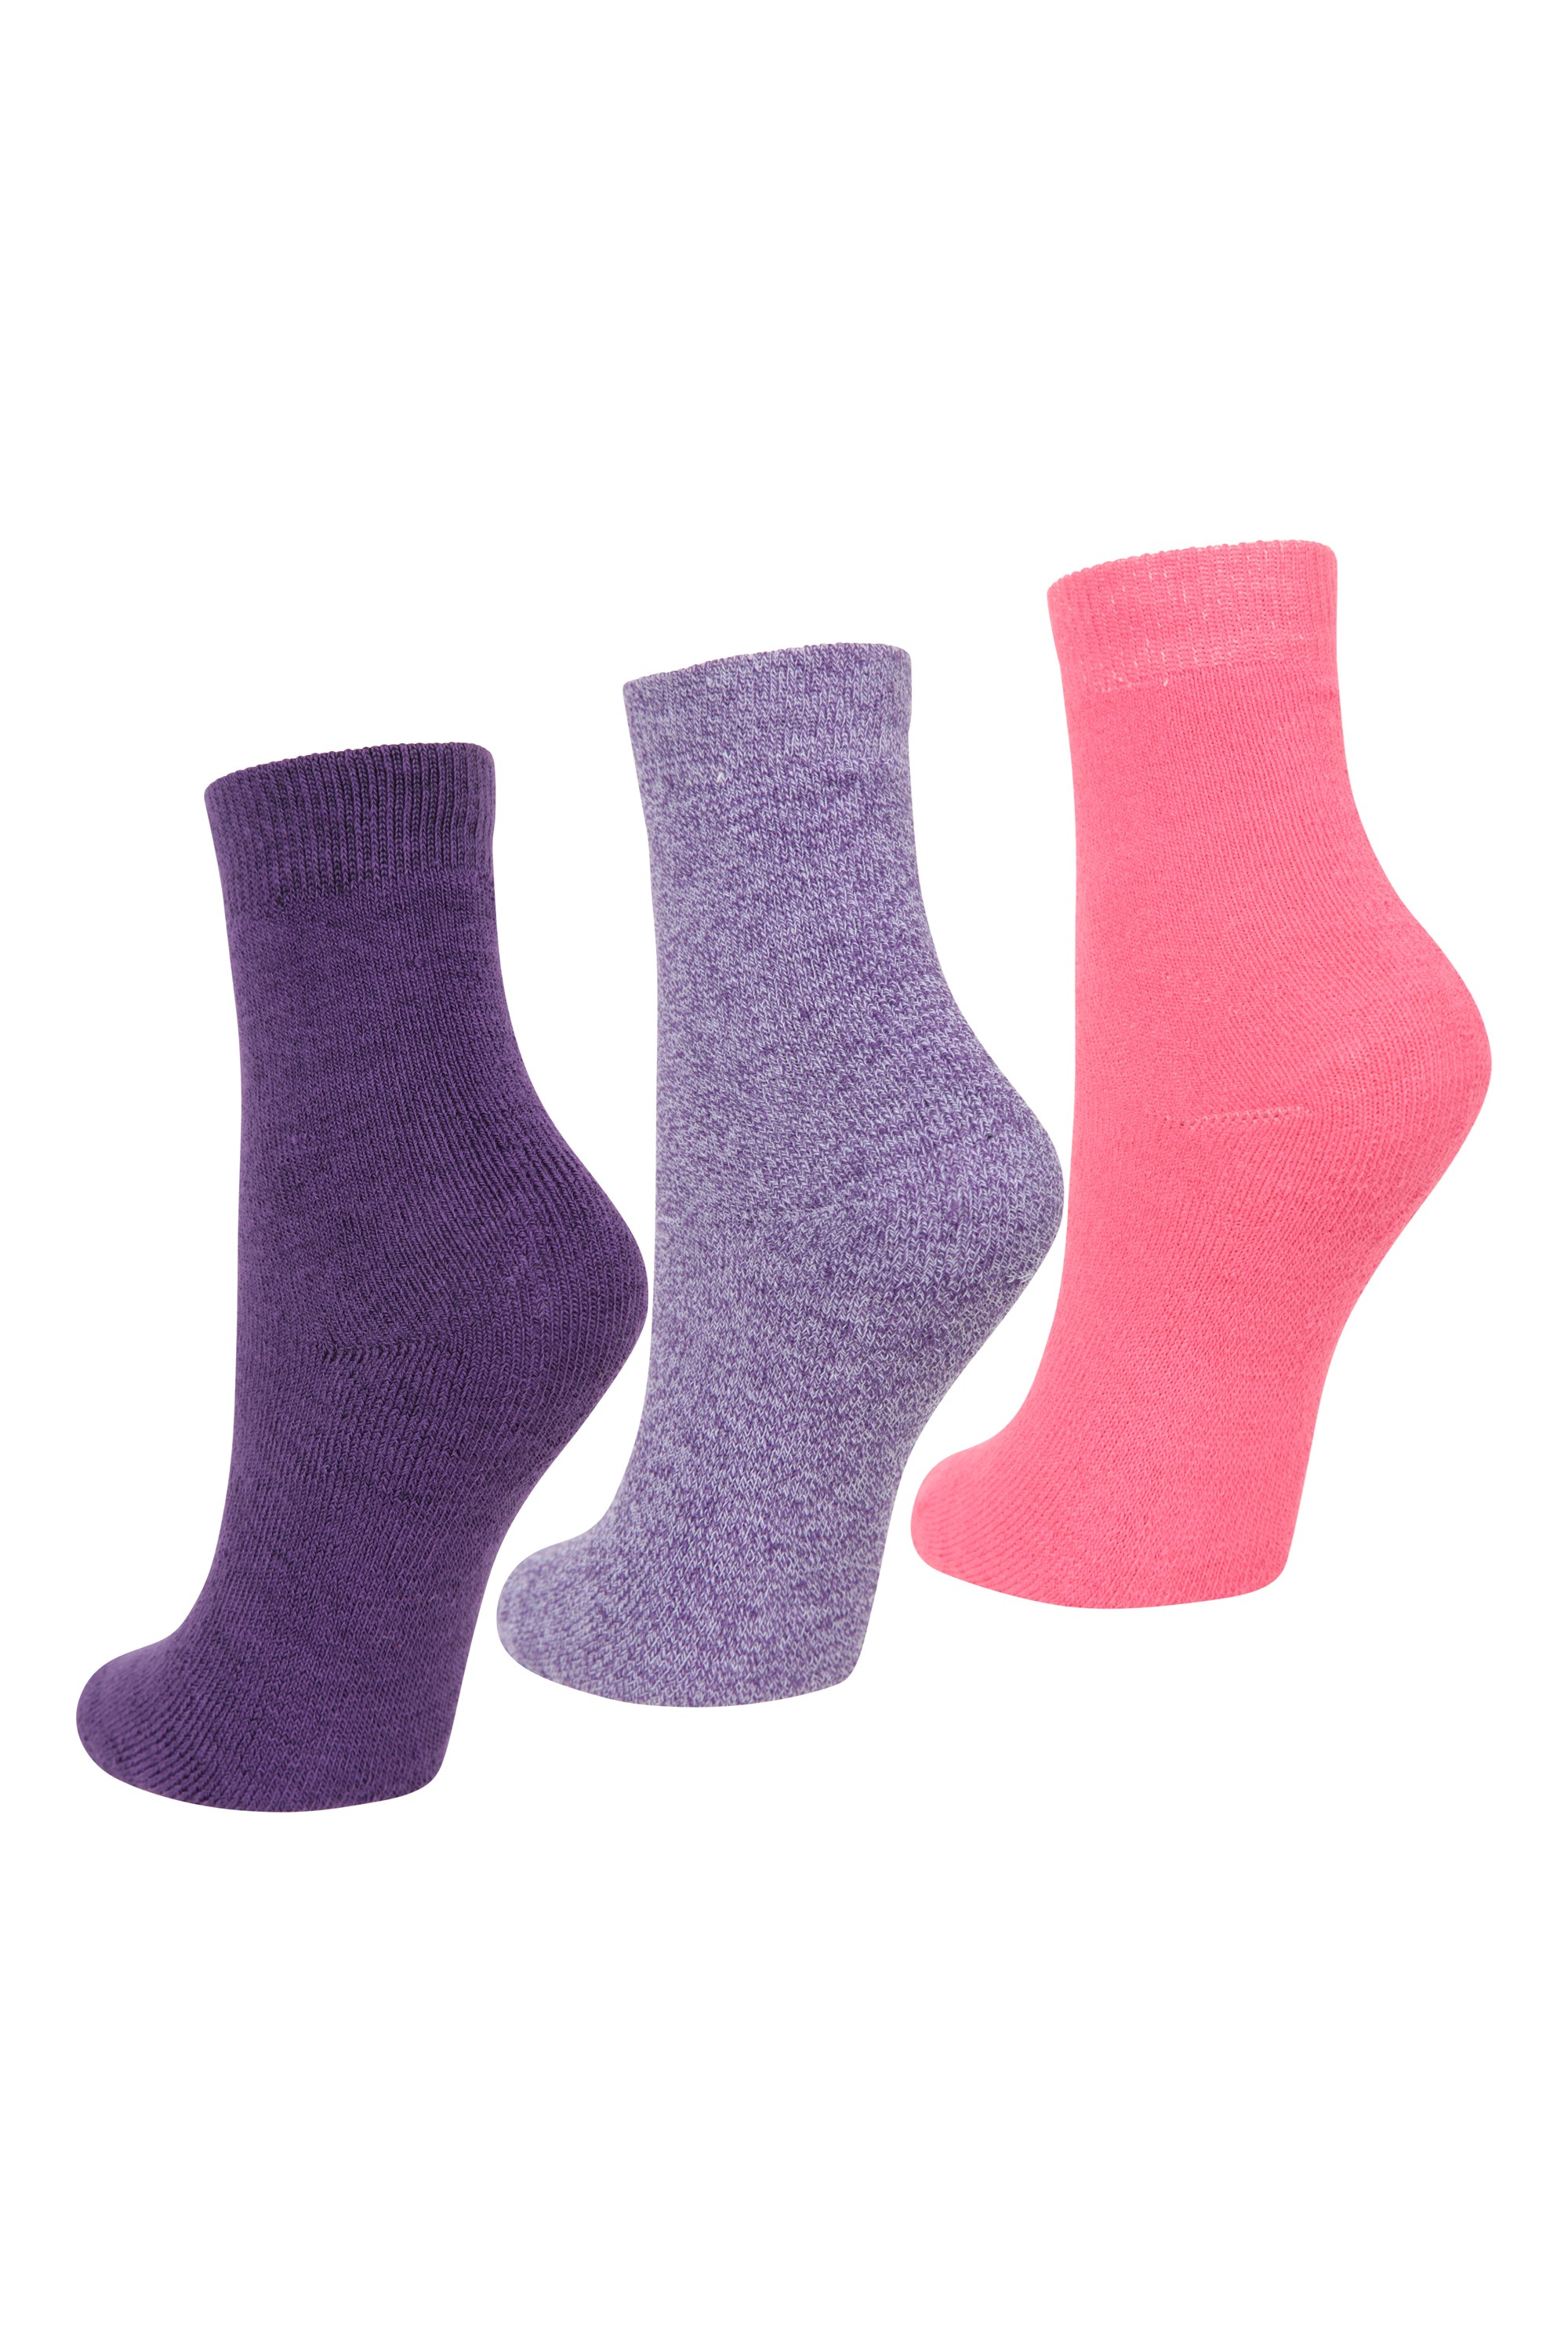 Woolly Wonders Kid's Socks – BlissBounce Socks